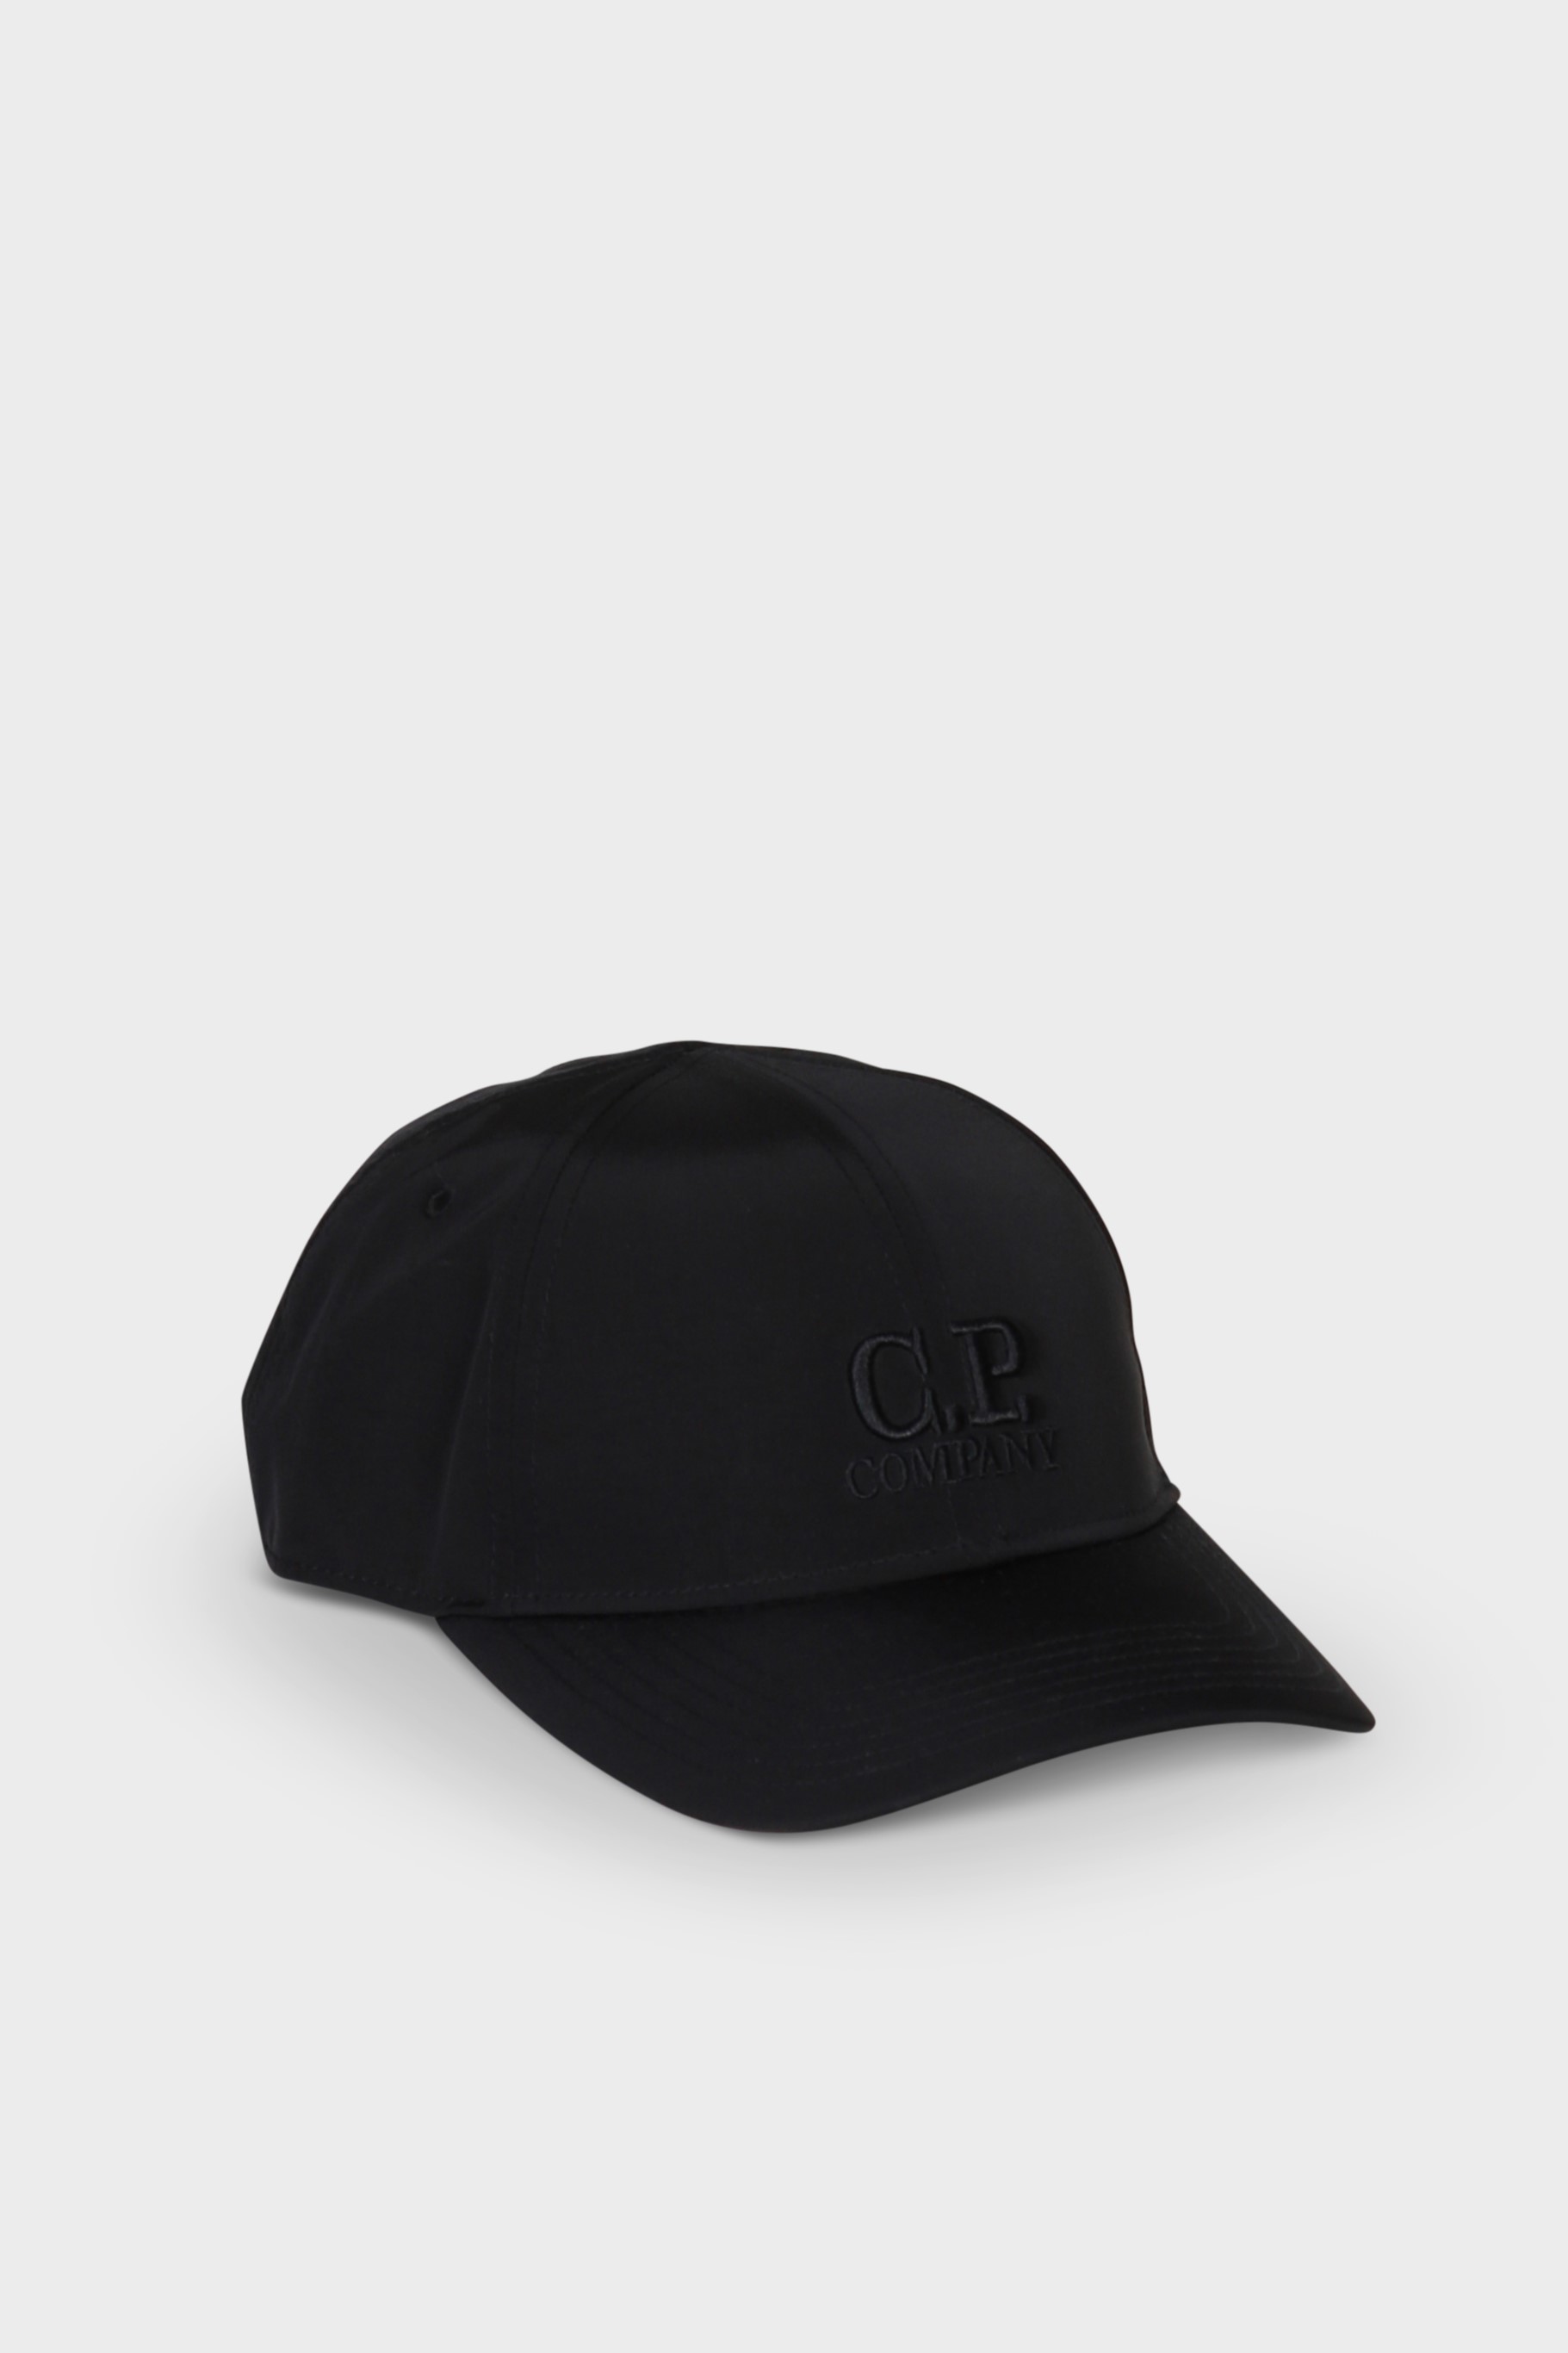 C.P. COMPANY Baseball Cap in Black